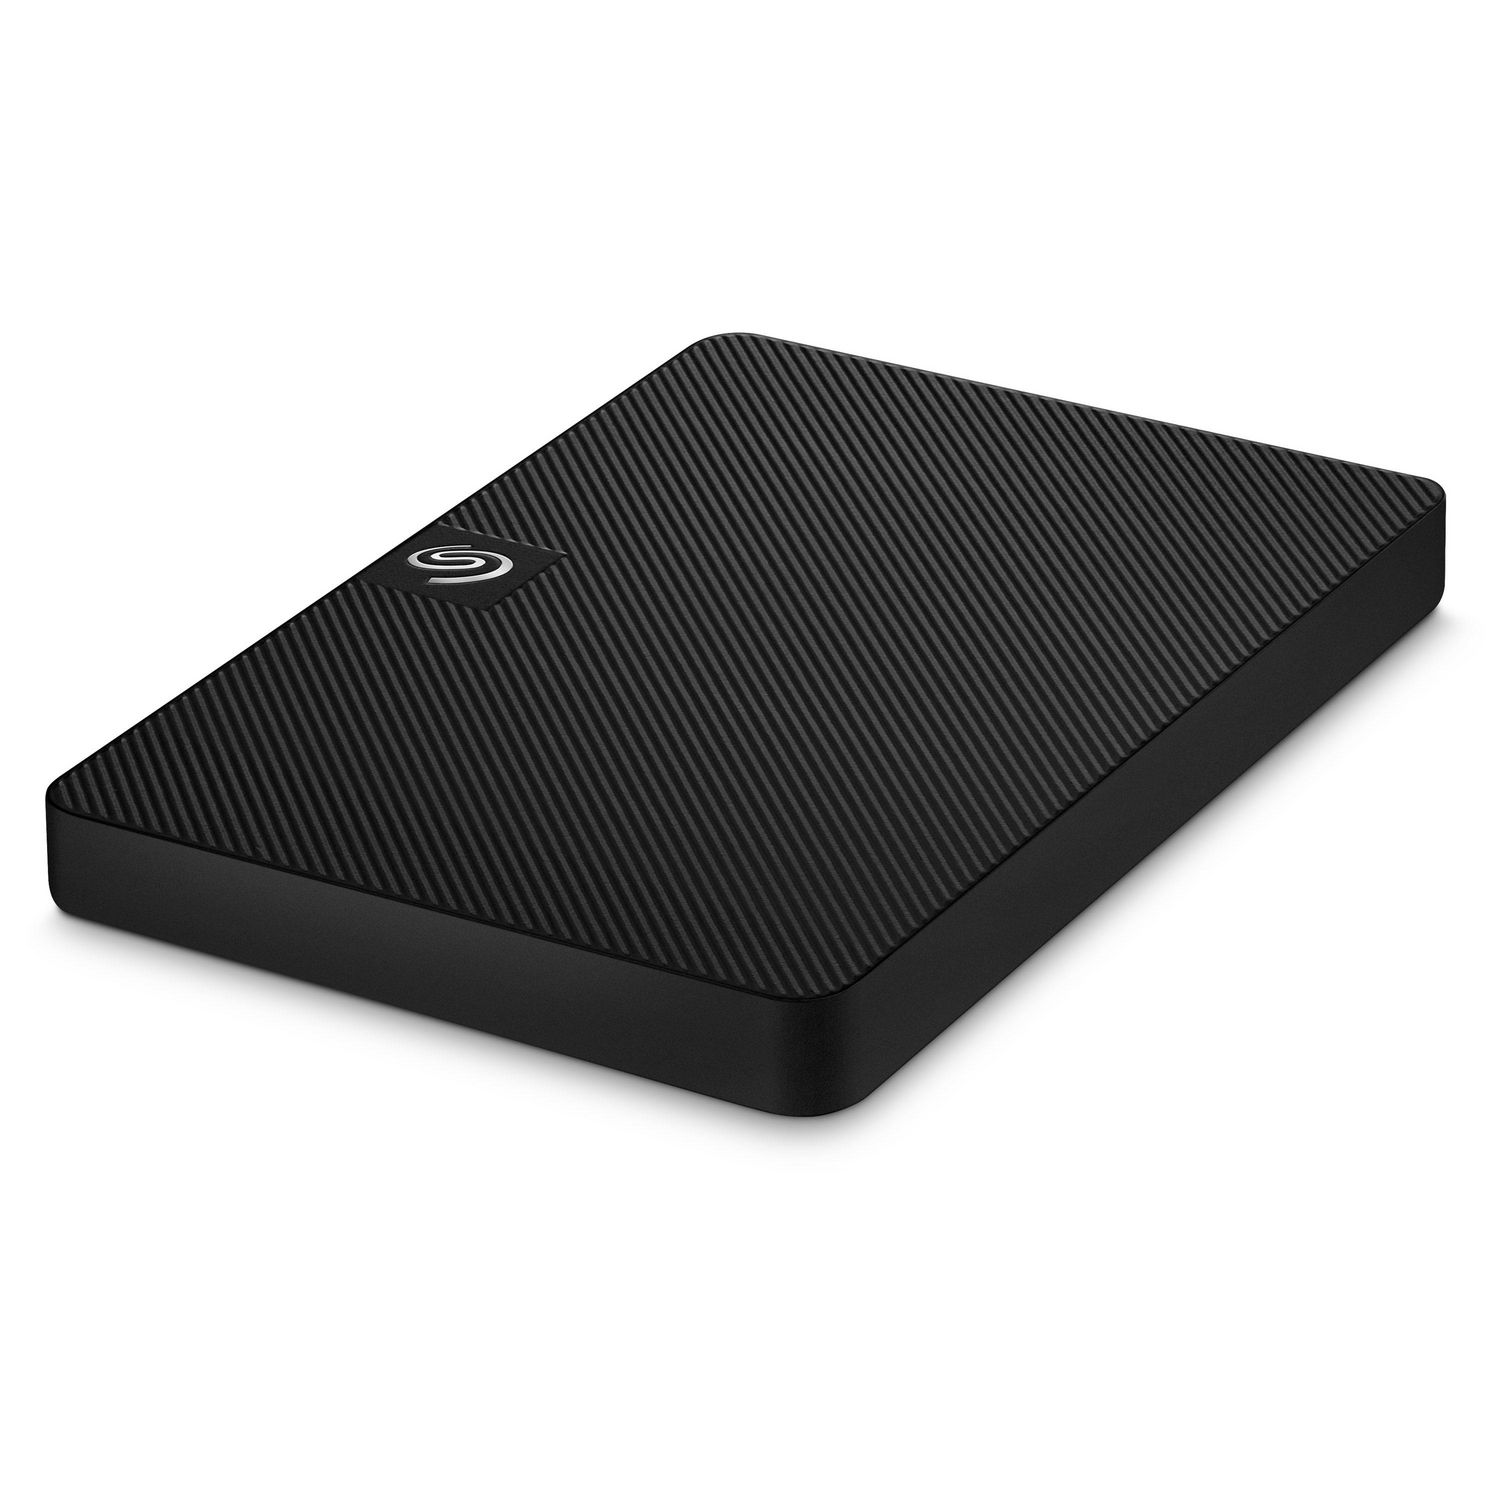 Seagate Expansion portable 2TB External Hard Drive HDD - USB 3.0